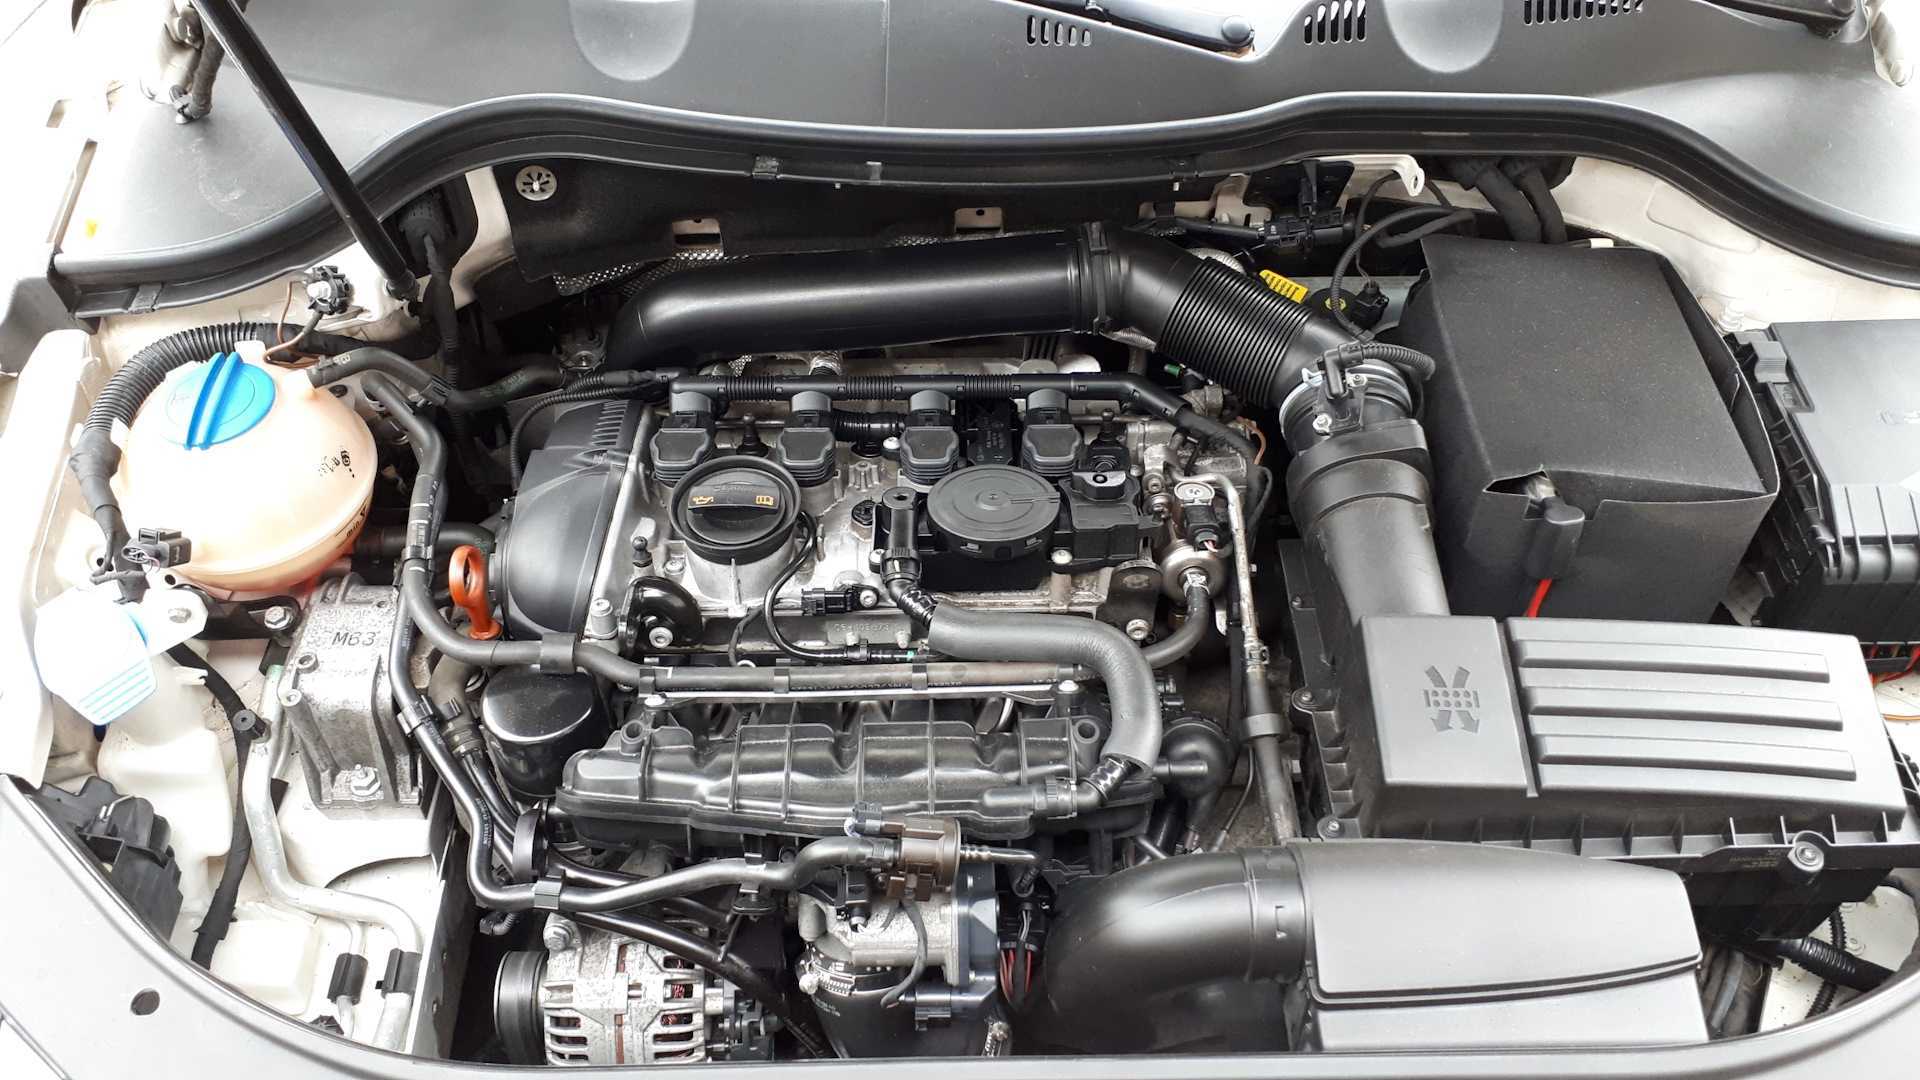 Volkswagen двигатели отзывы. Volkswagen Passat Motor TSI. Двигатель Passat 1.8 TSI. Двигатель Фольксваген 1.8 TSI. Мотор Пассат б6 1.8 турбо.